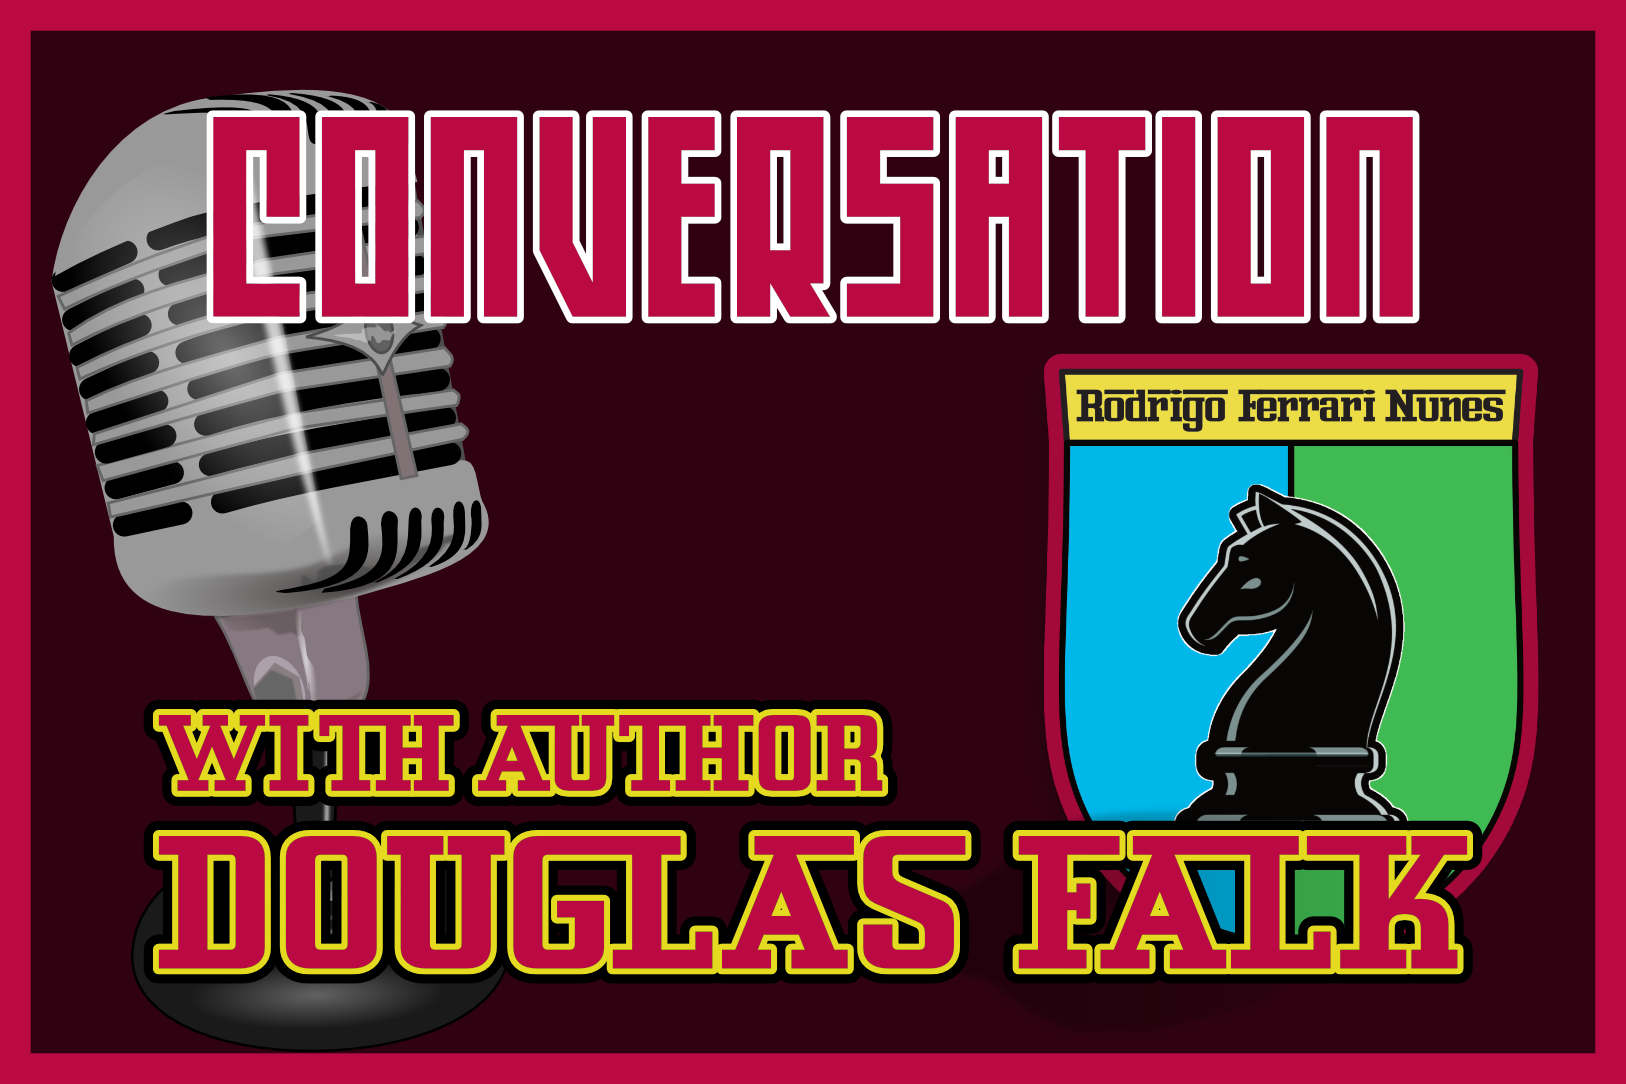 CONVERSATION WITH DOUGLAS FALK